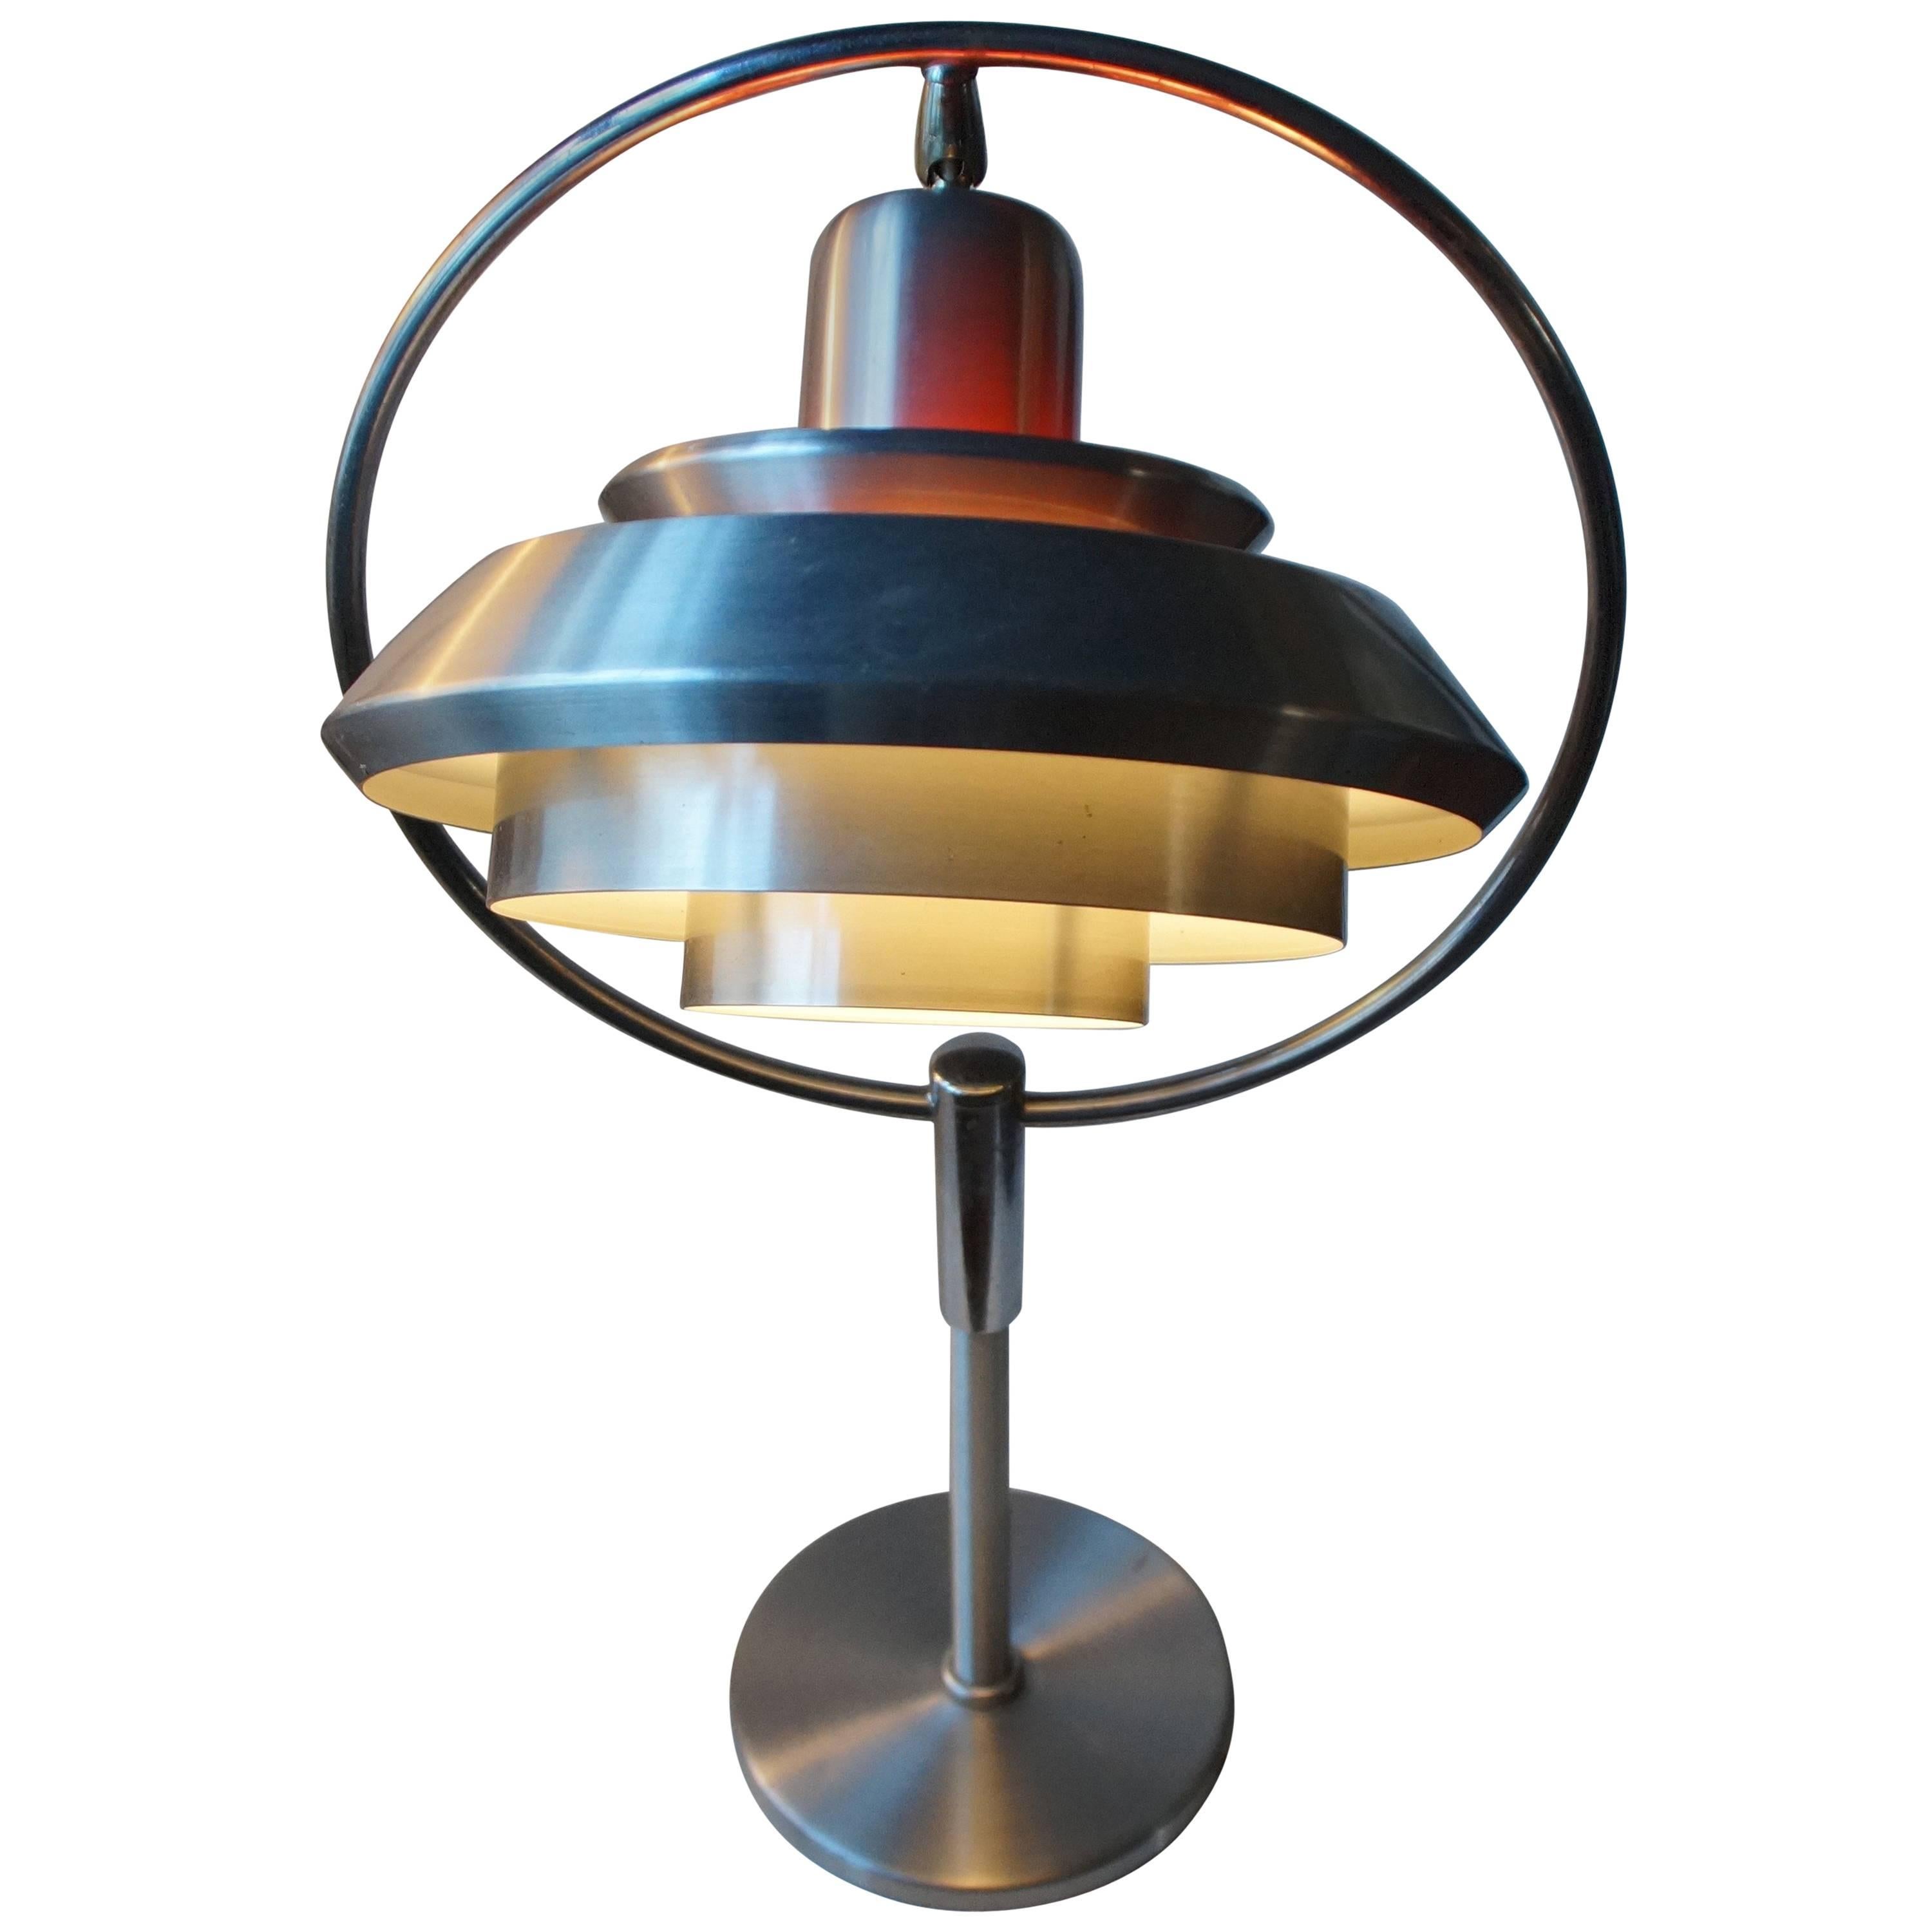 Rare Mid-Century Orbit Table Lamp by Carl Thore for Granhaga, Sweden, 1960s